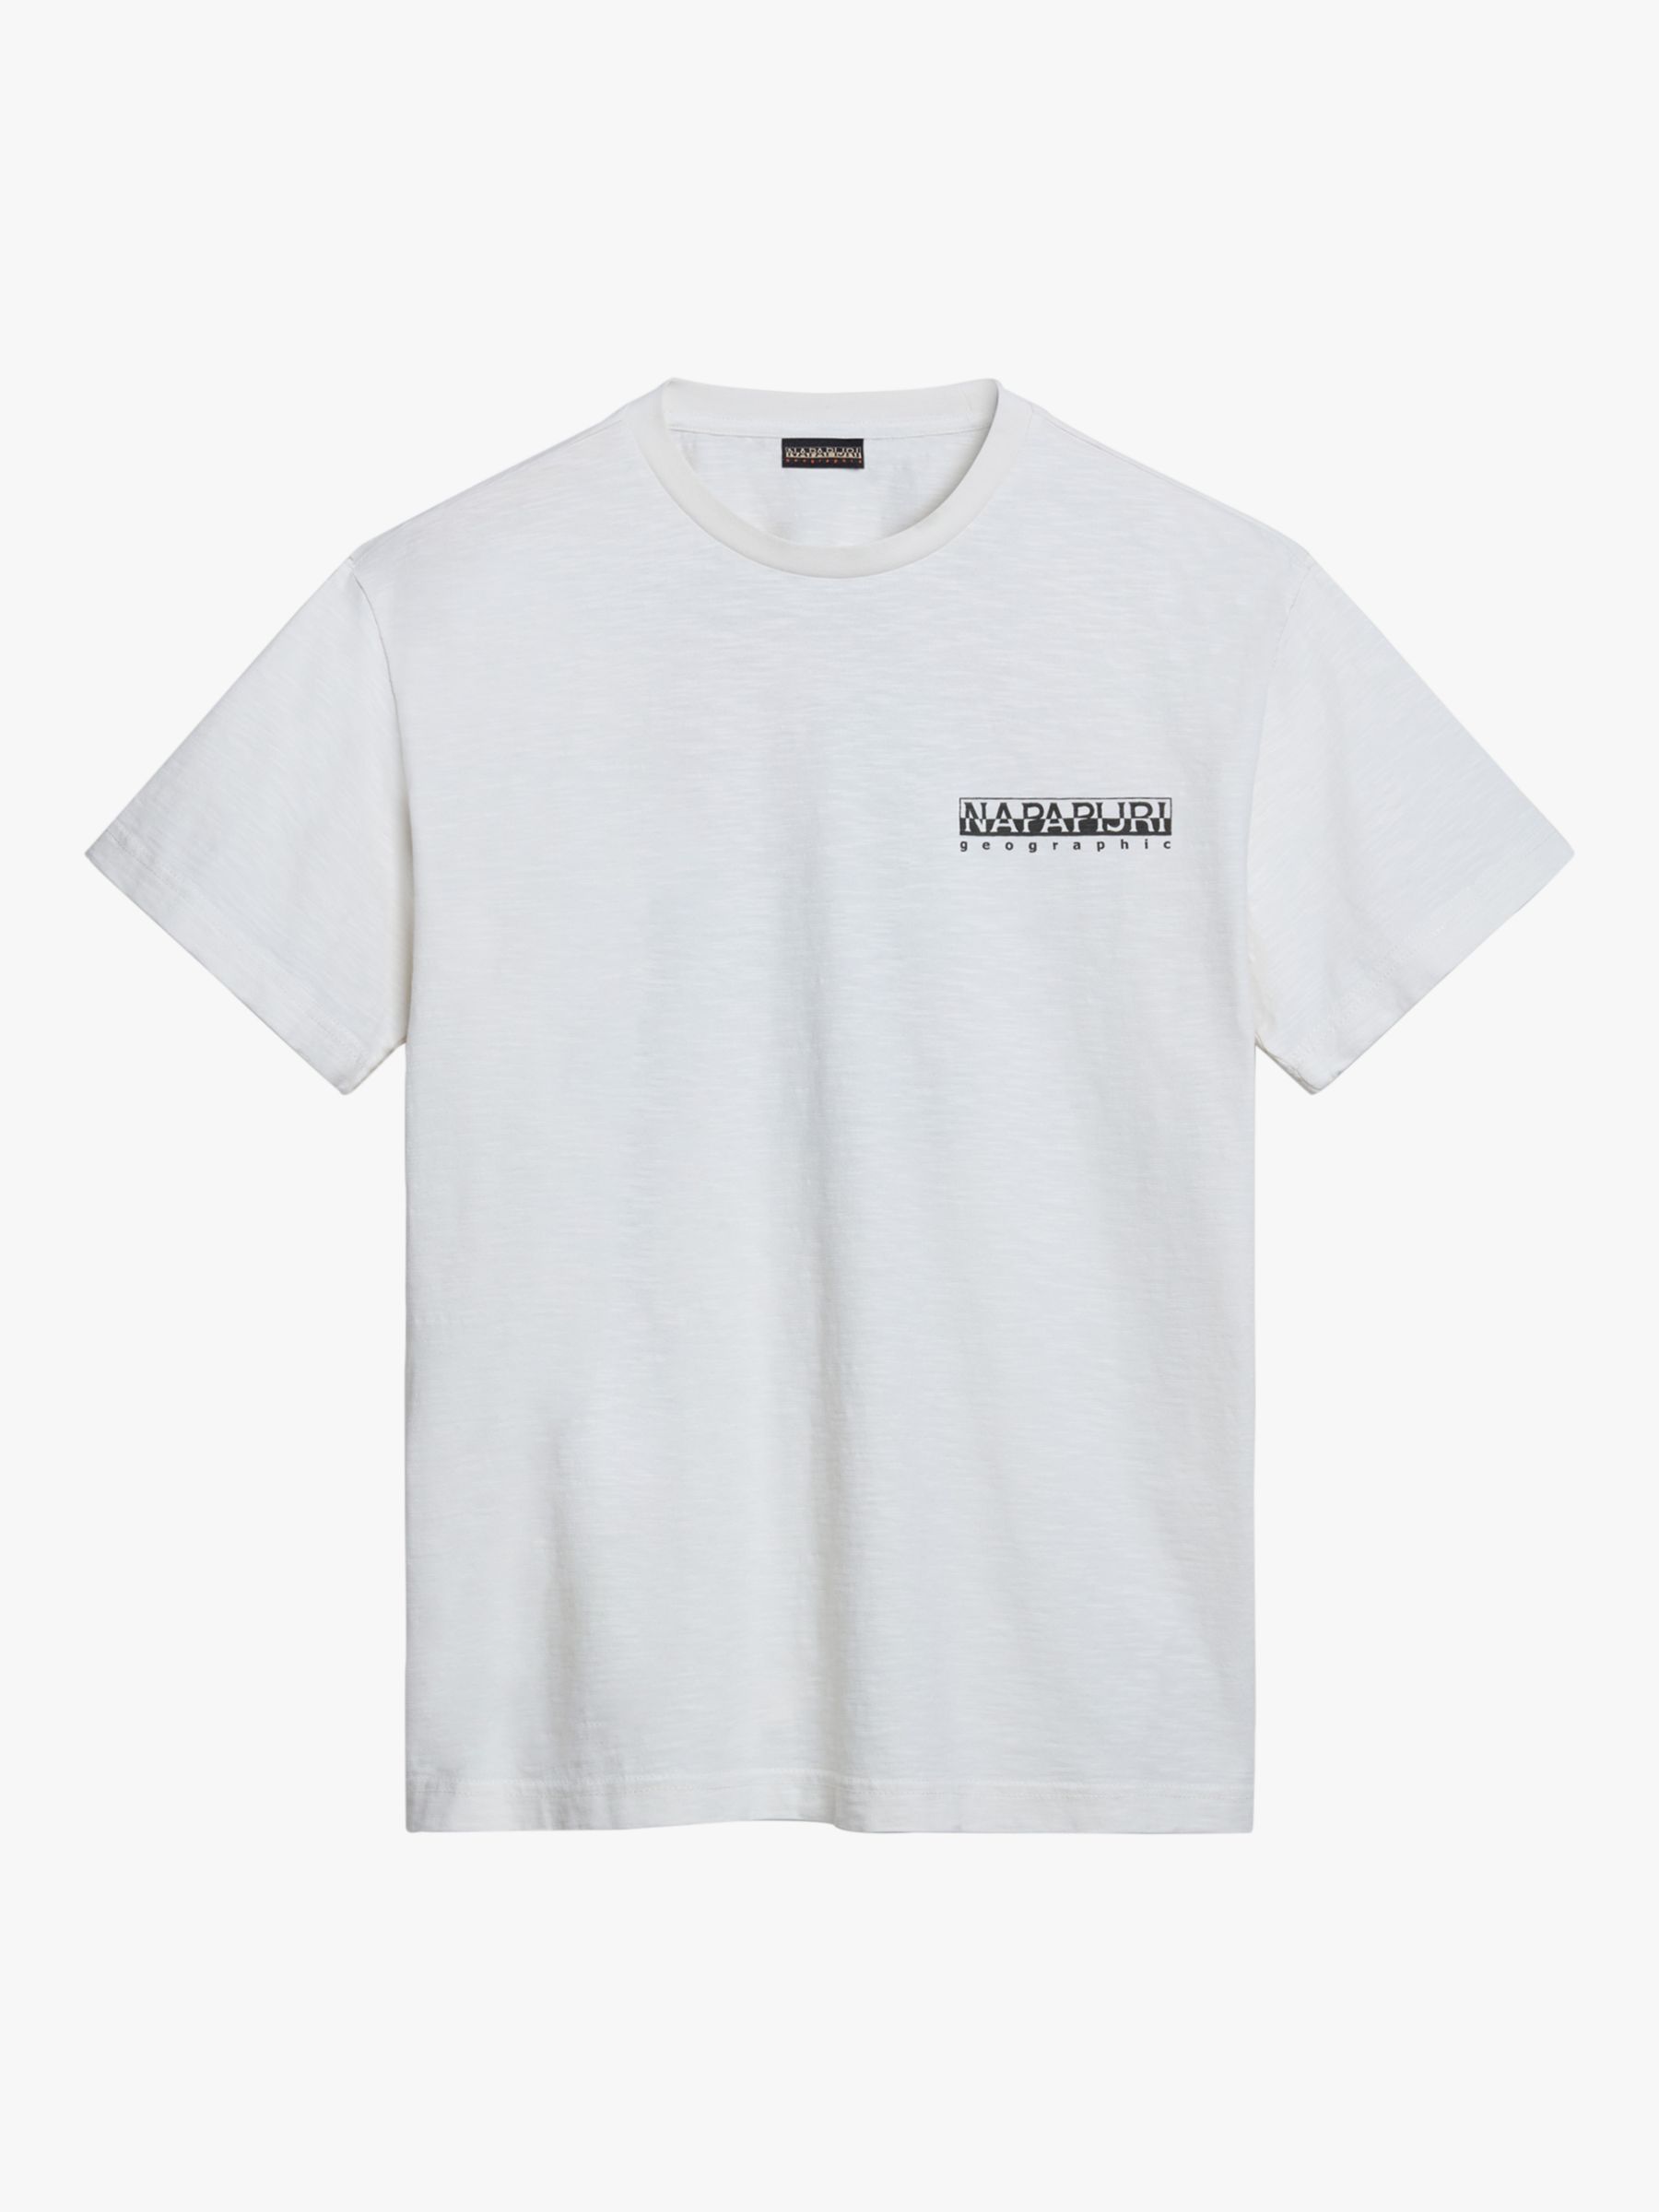 Buy Napapijri Martre Short Sleeve T-Shirt, White/Multi Online at johnlewis.com